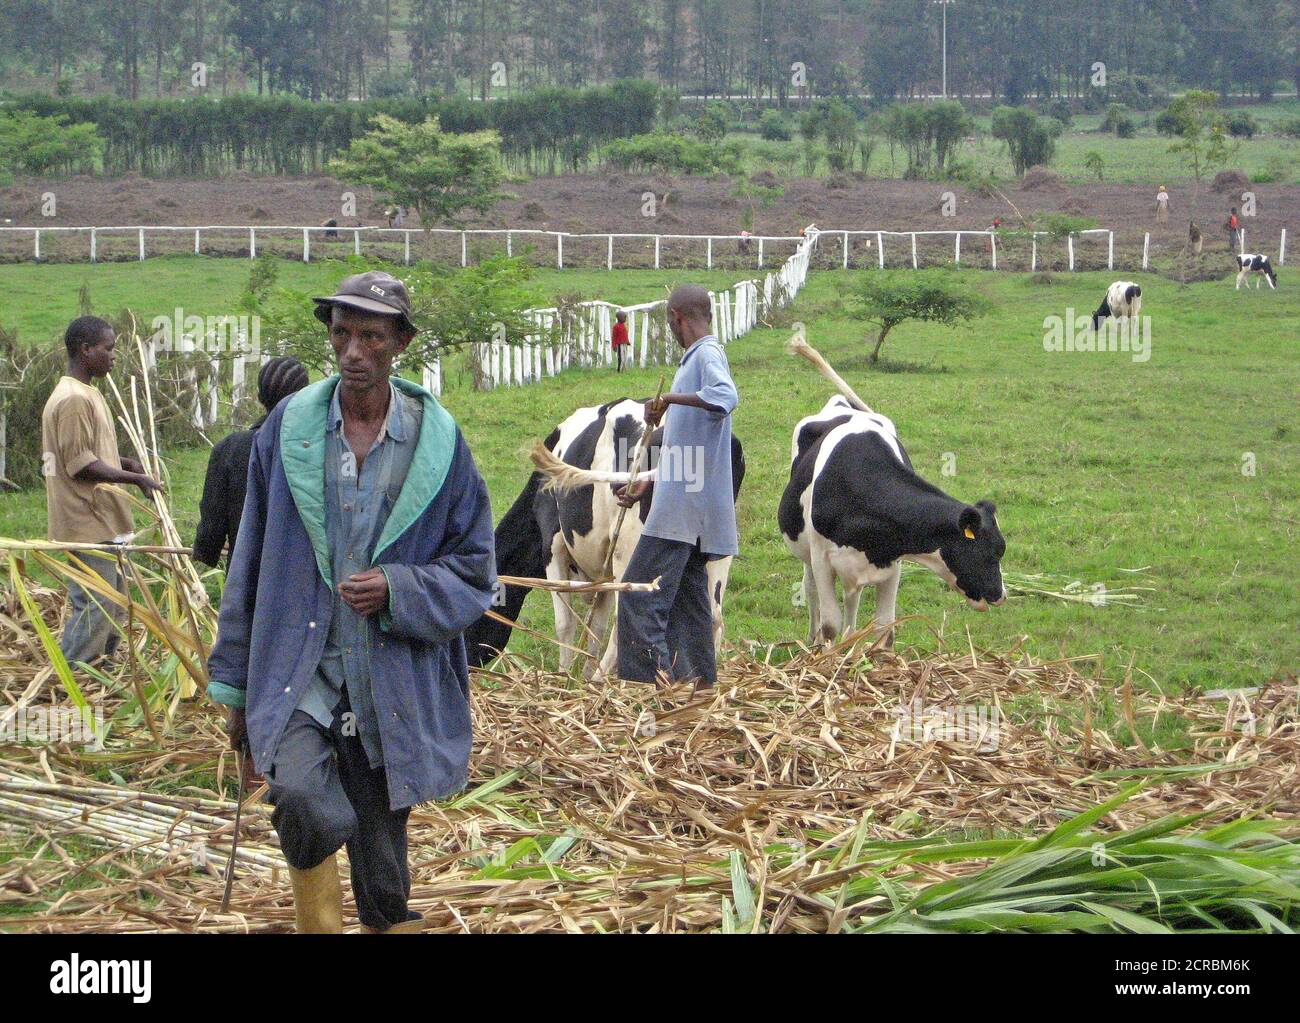 2009 - Rwanda Dairy Farmers and Holstein Cows in a field Stock Photo